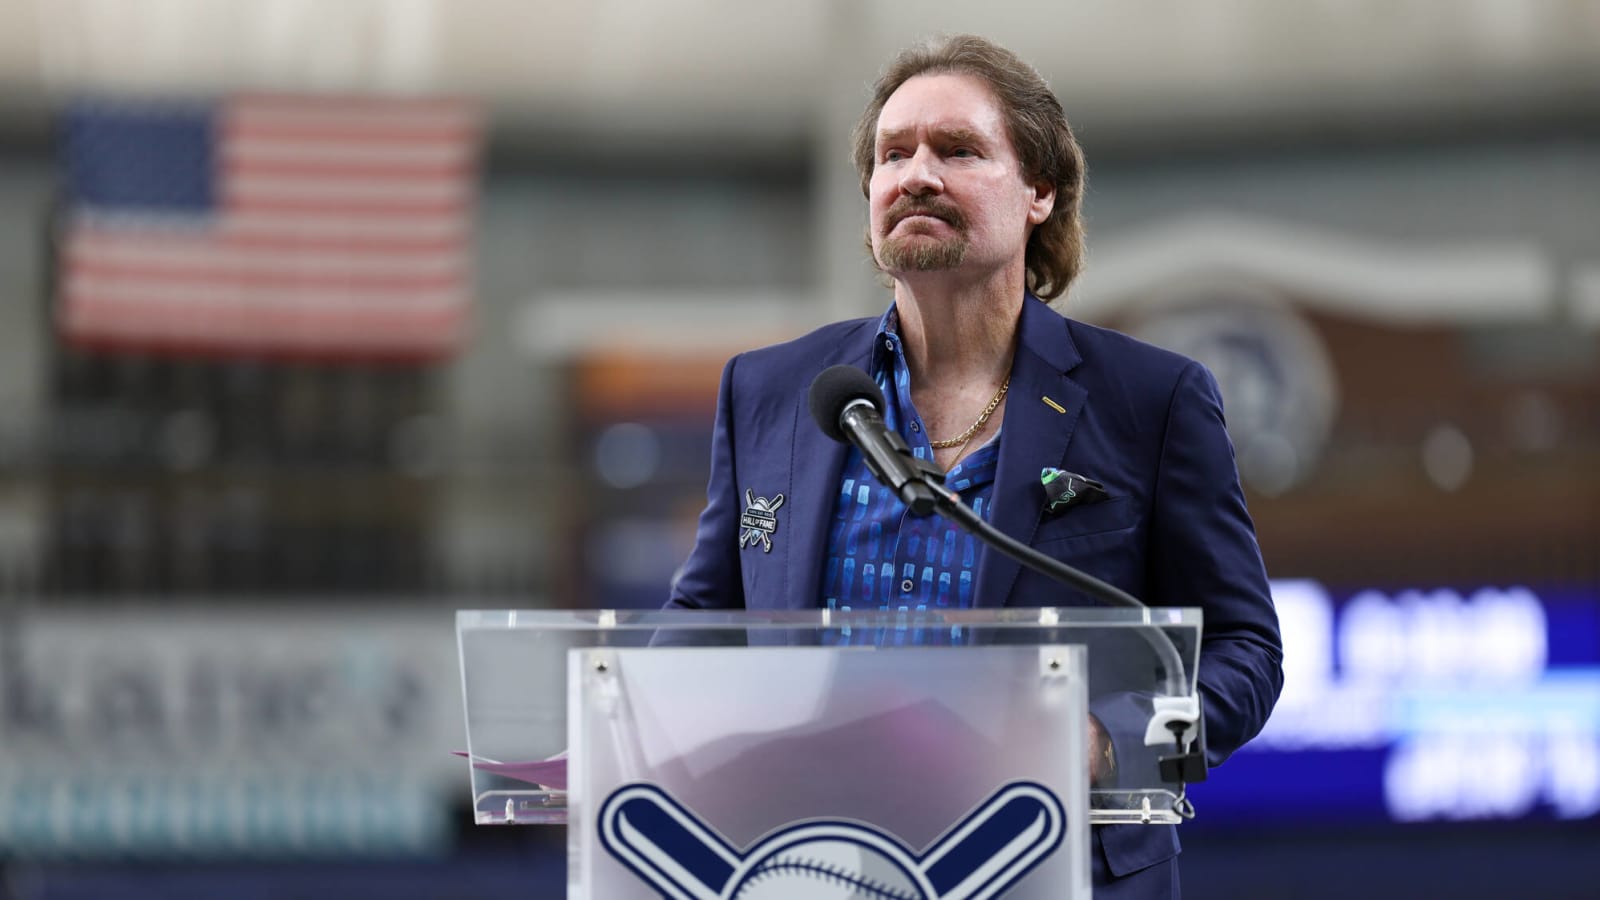 MLB Hall of Famer thinks new rules and tactics are ruining baseball